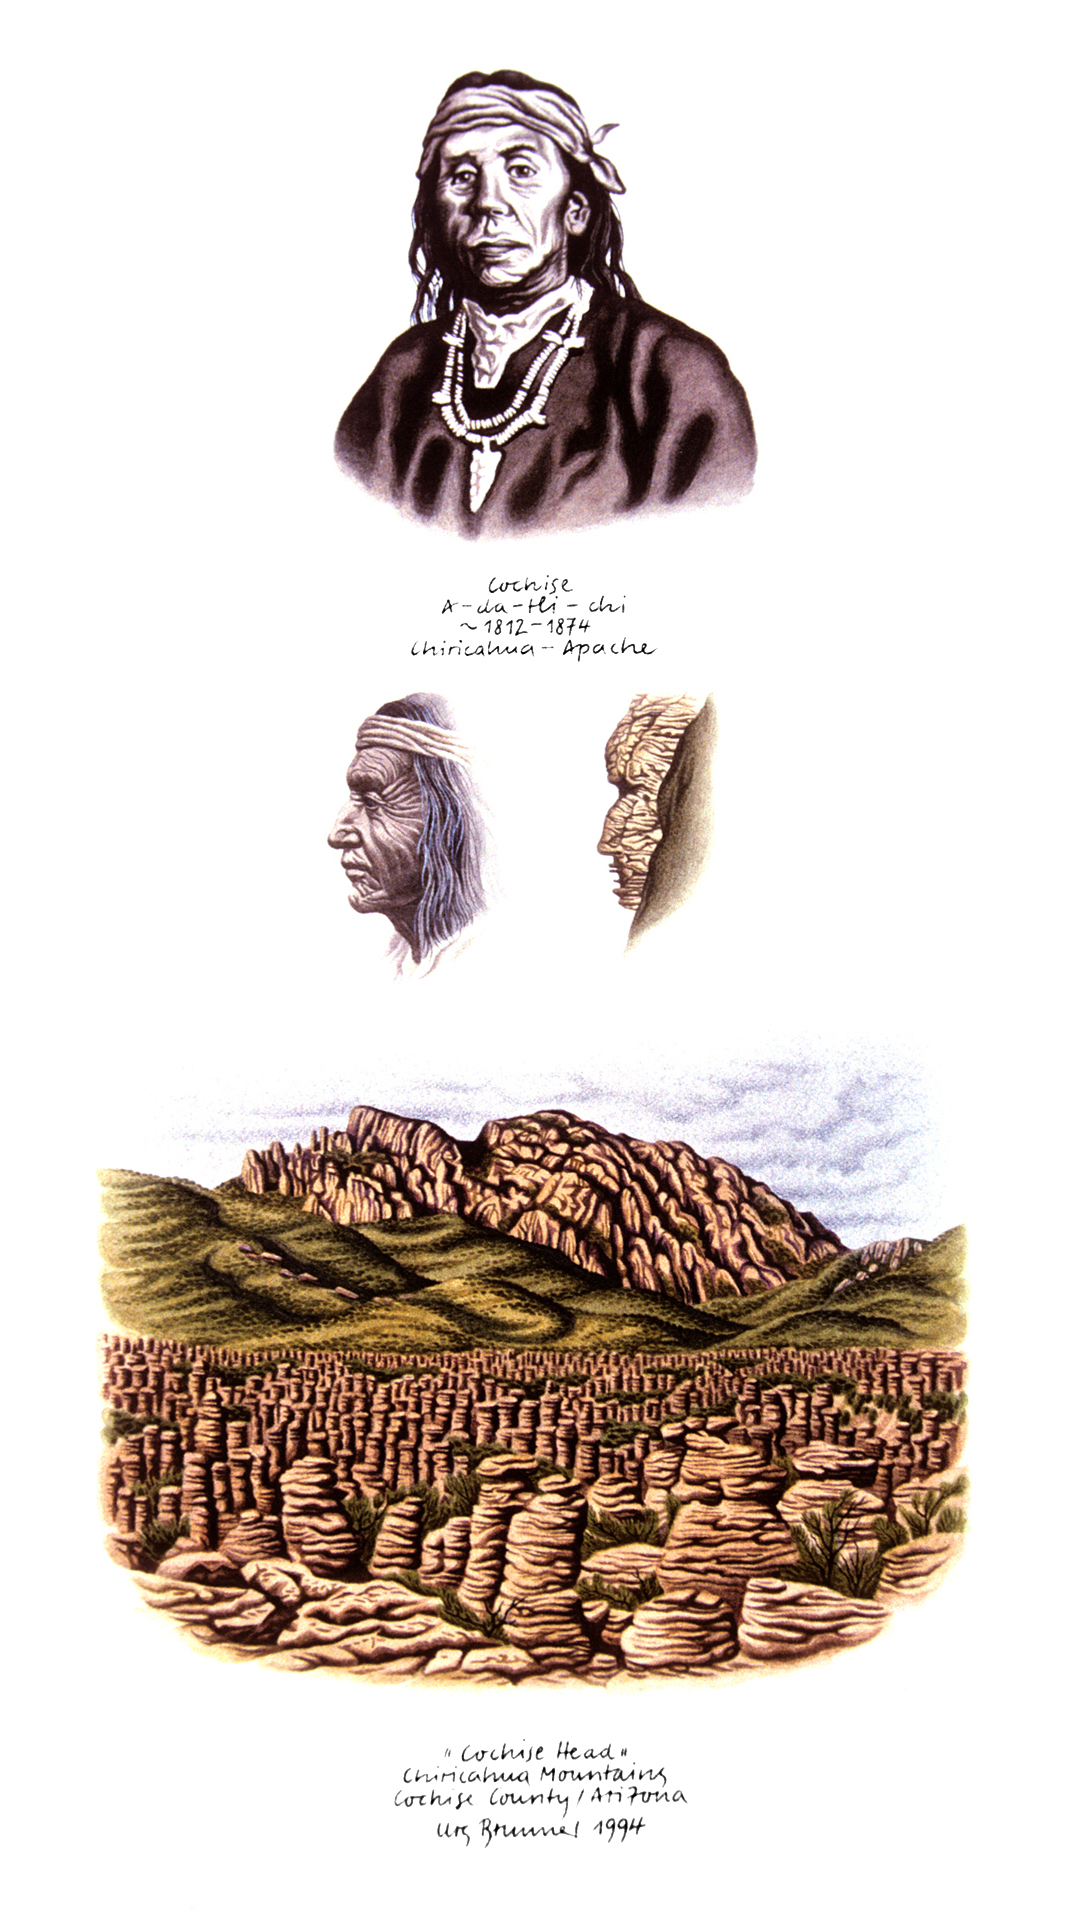 Cochise Head, 1994, Aquarell und Farbstift auf Papier, 42 x 29,7 cm